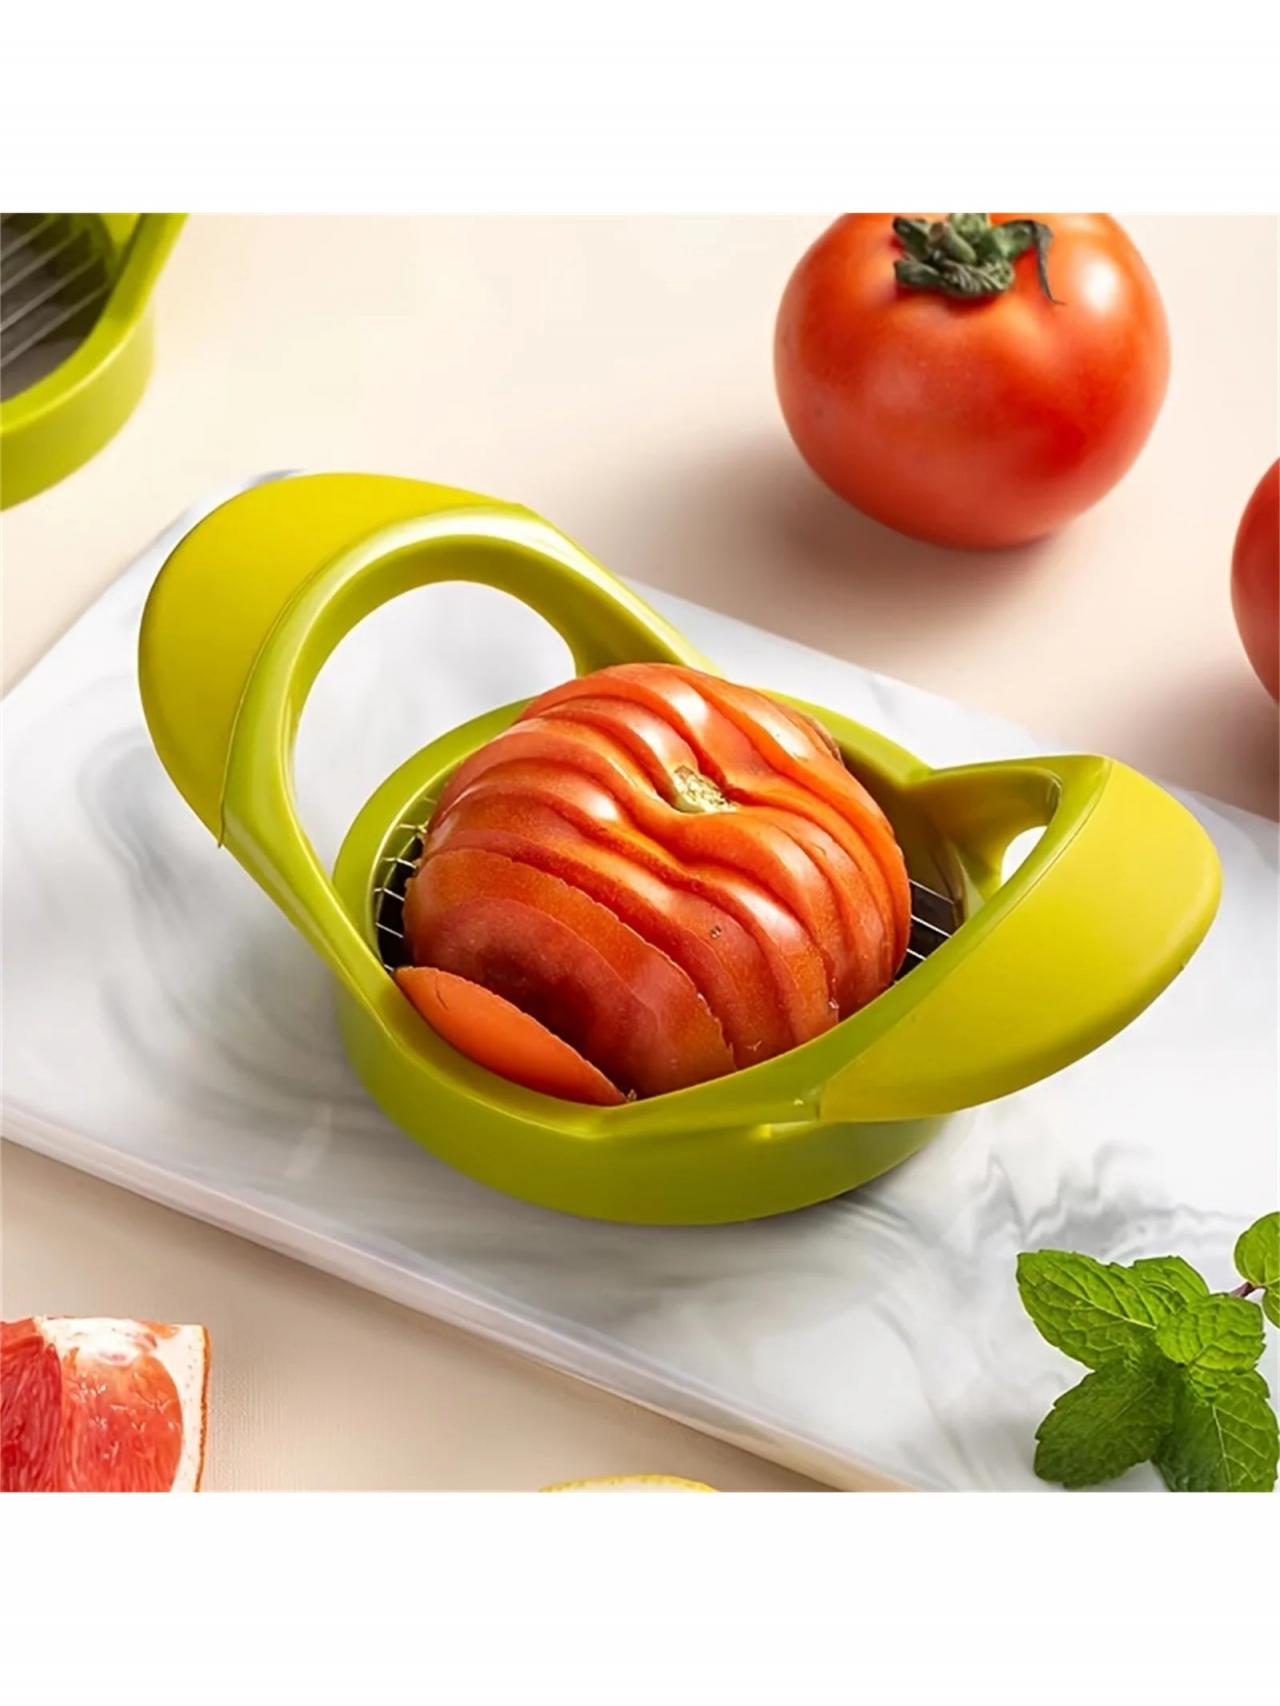 Handy Green Tomato Slicer Cutter Kitchen Gadget Tool